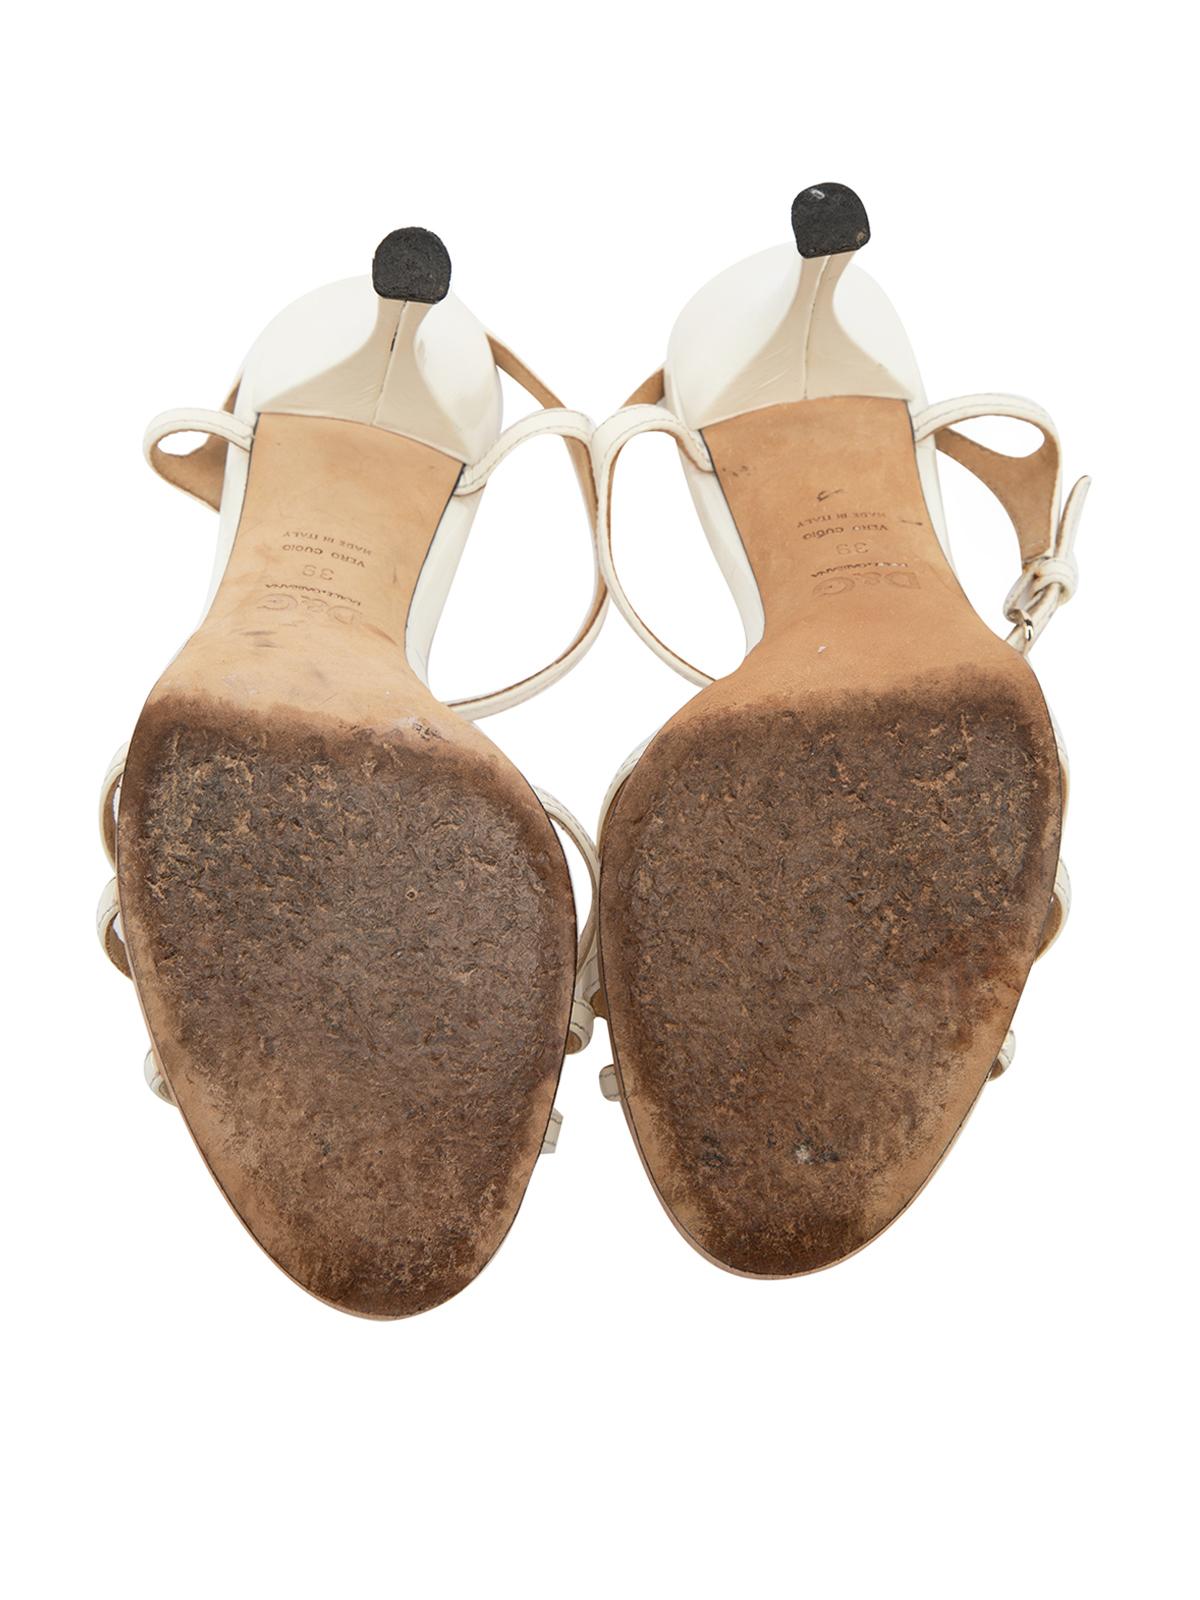 Pre-Loved Dolce & Gabbana Women's White Leather Patent Sandal Heels 3